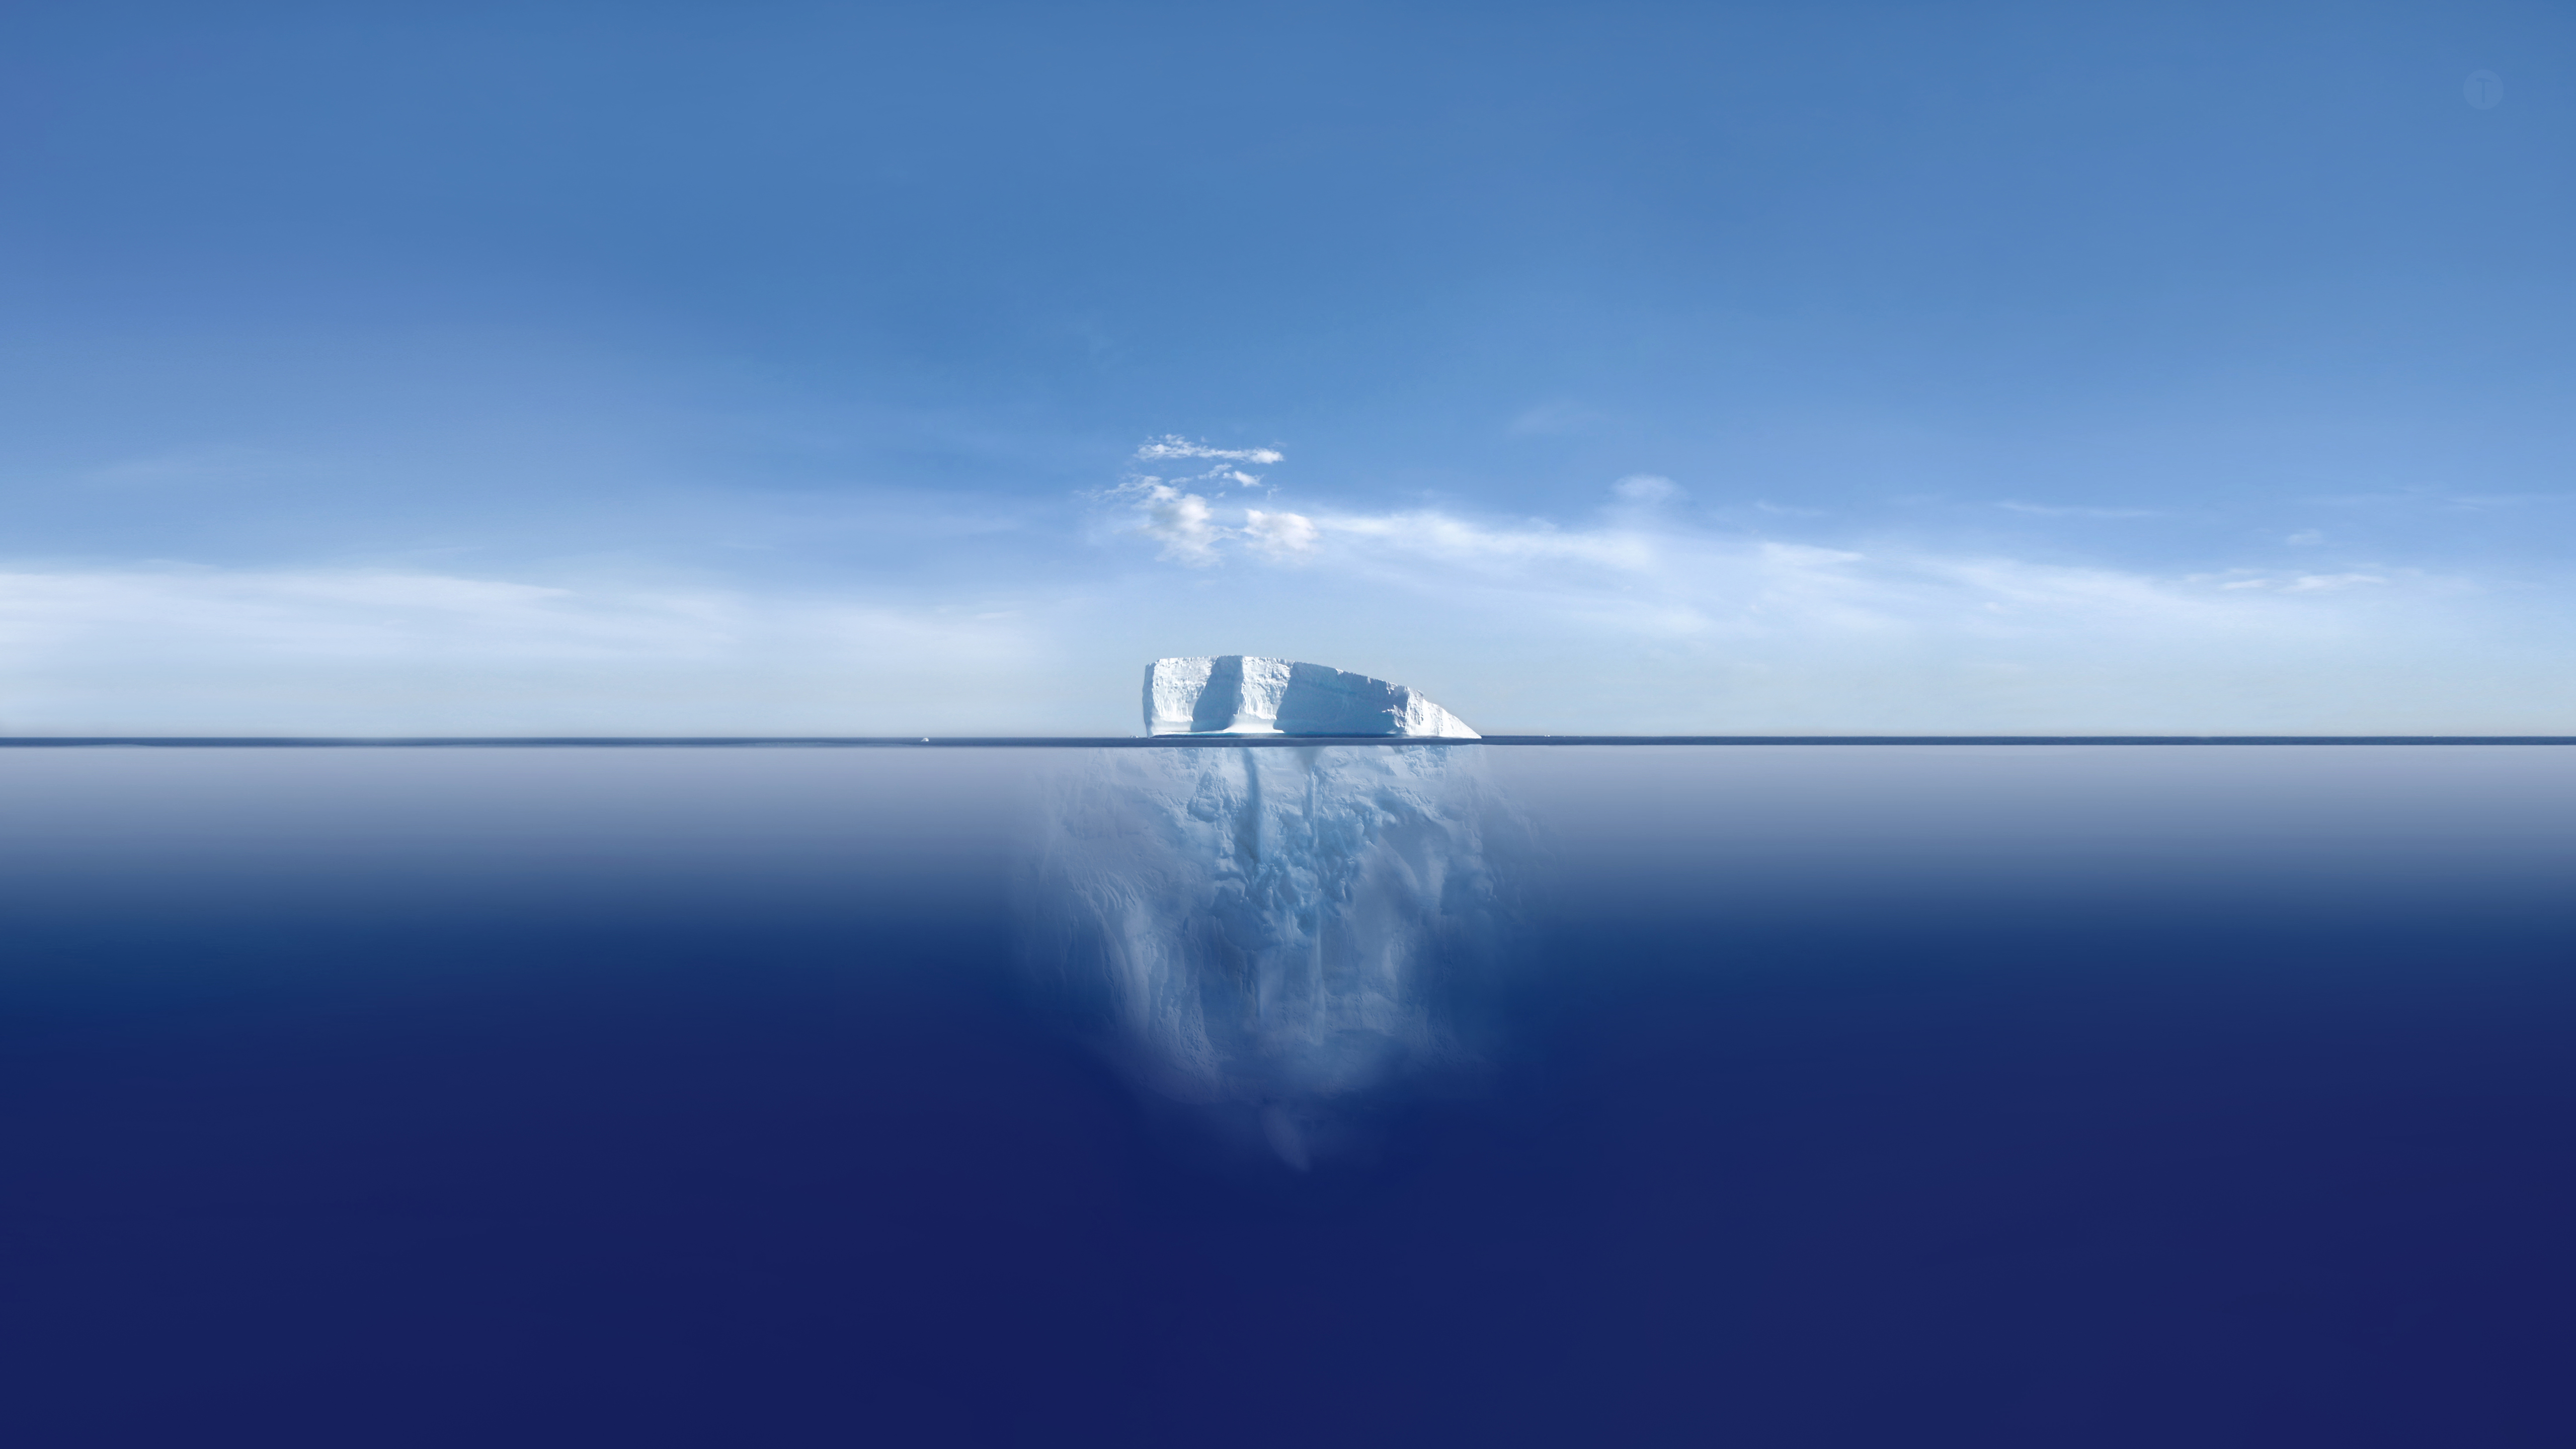 General 5120x2880 sky sea iceberg simple background minimalism water symmetry blue